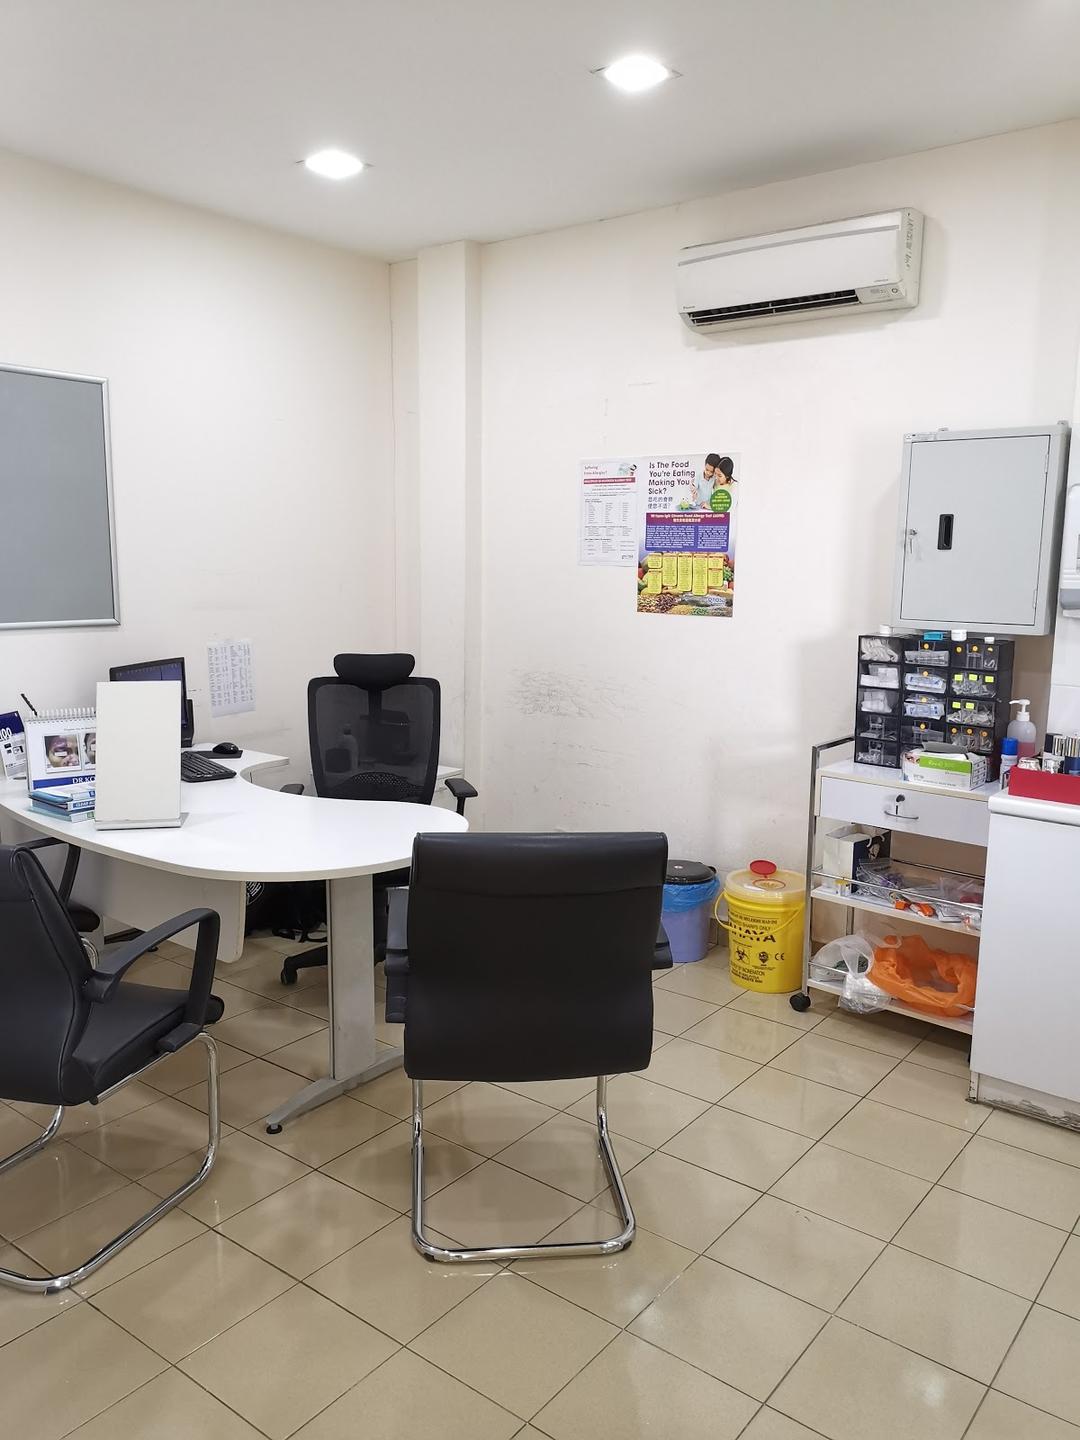 Photo of Klinik Dr Ko (Kota Kinabalu) - Kota Kinabalu, Sabah, Malaysia